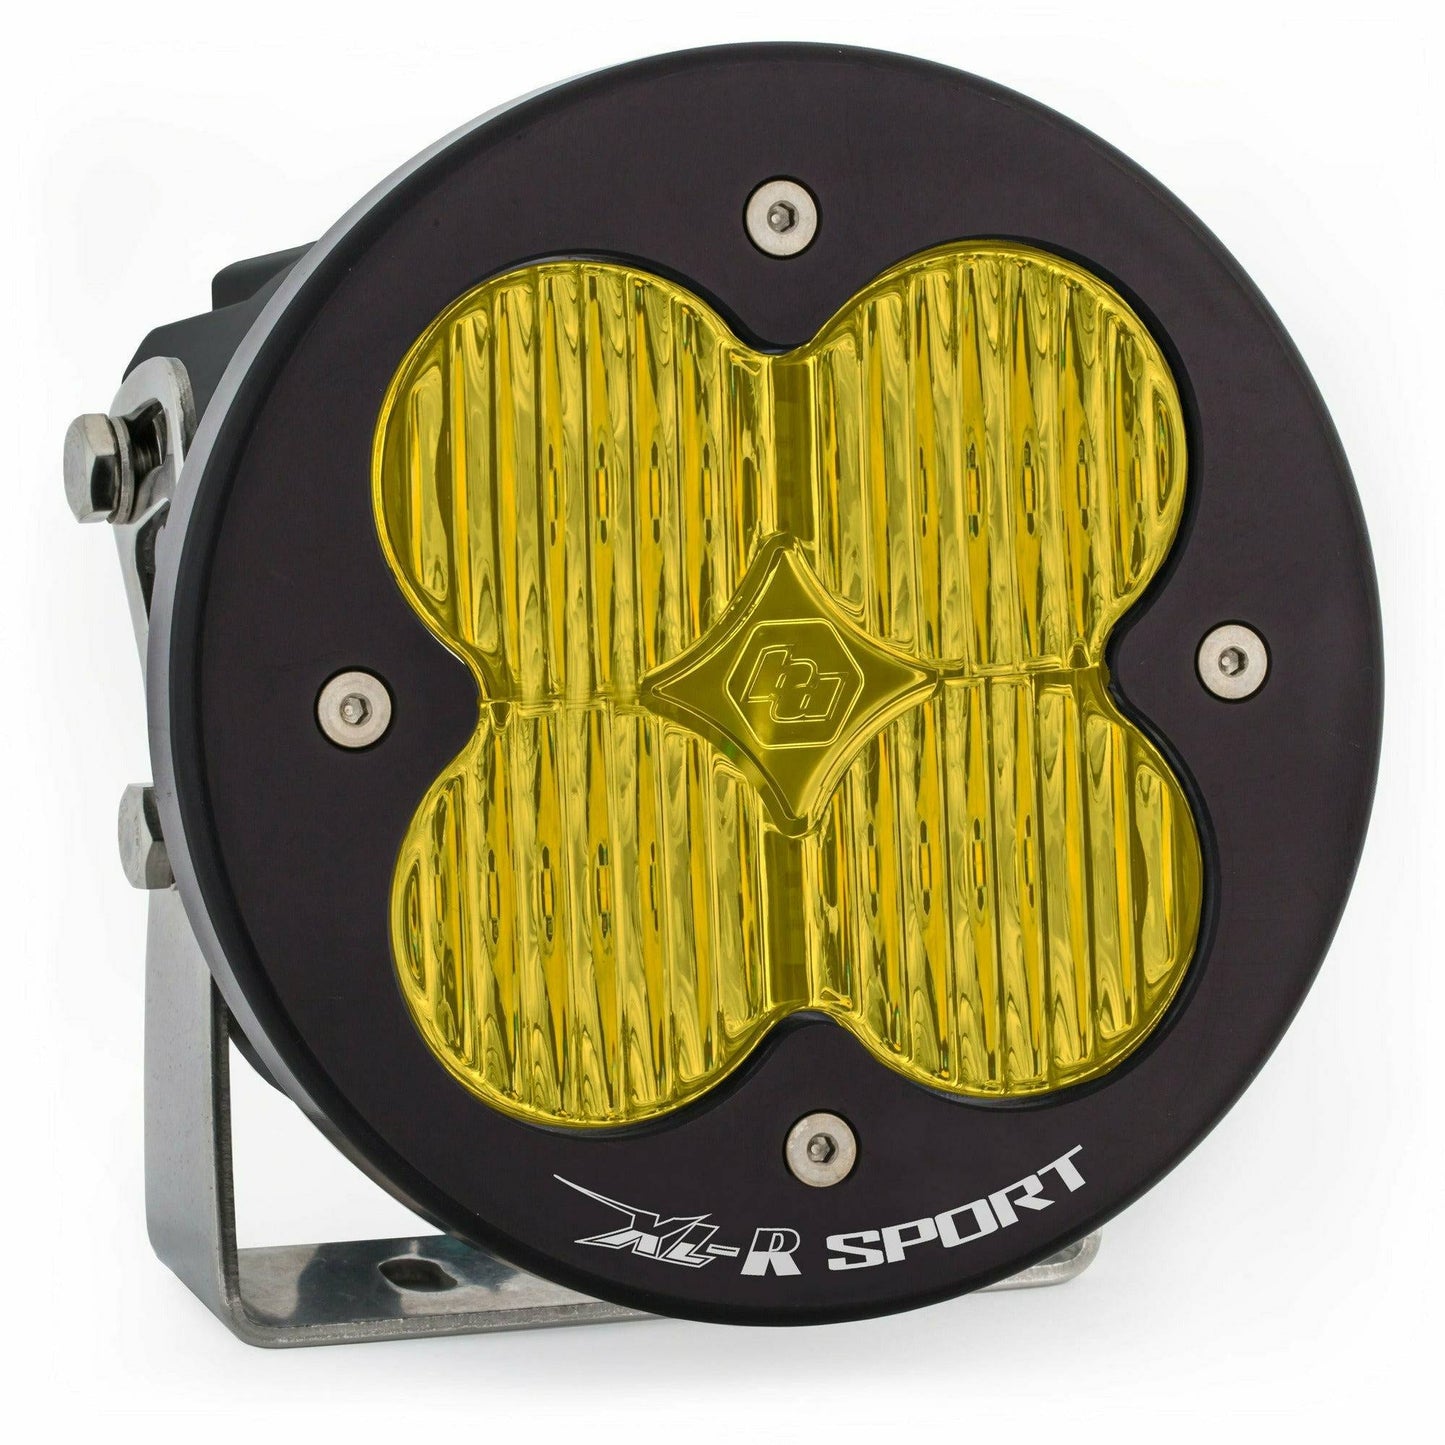 XL-R Sport LED Light Pod